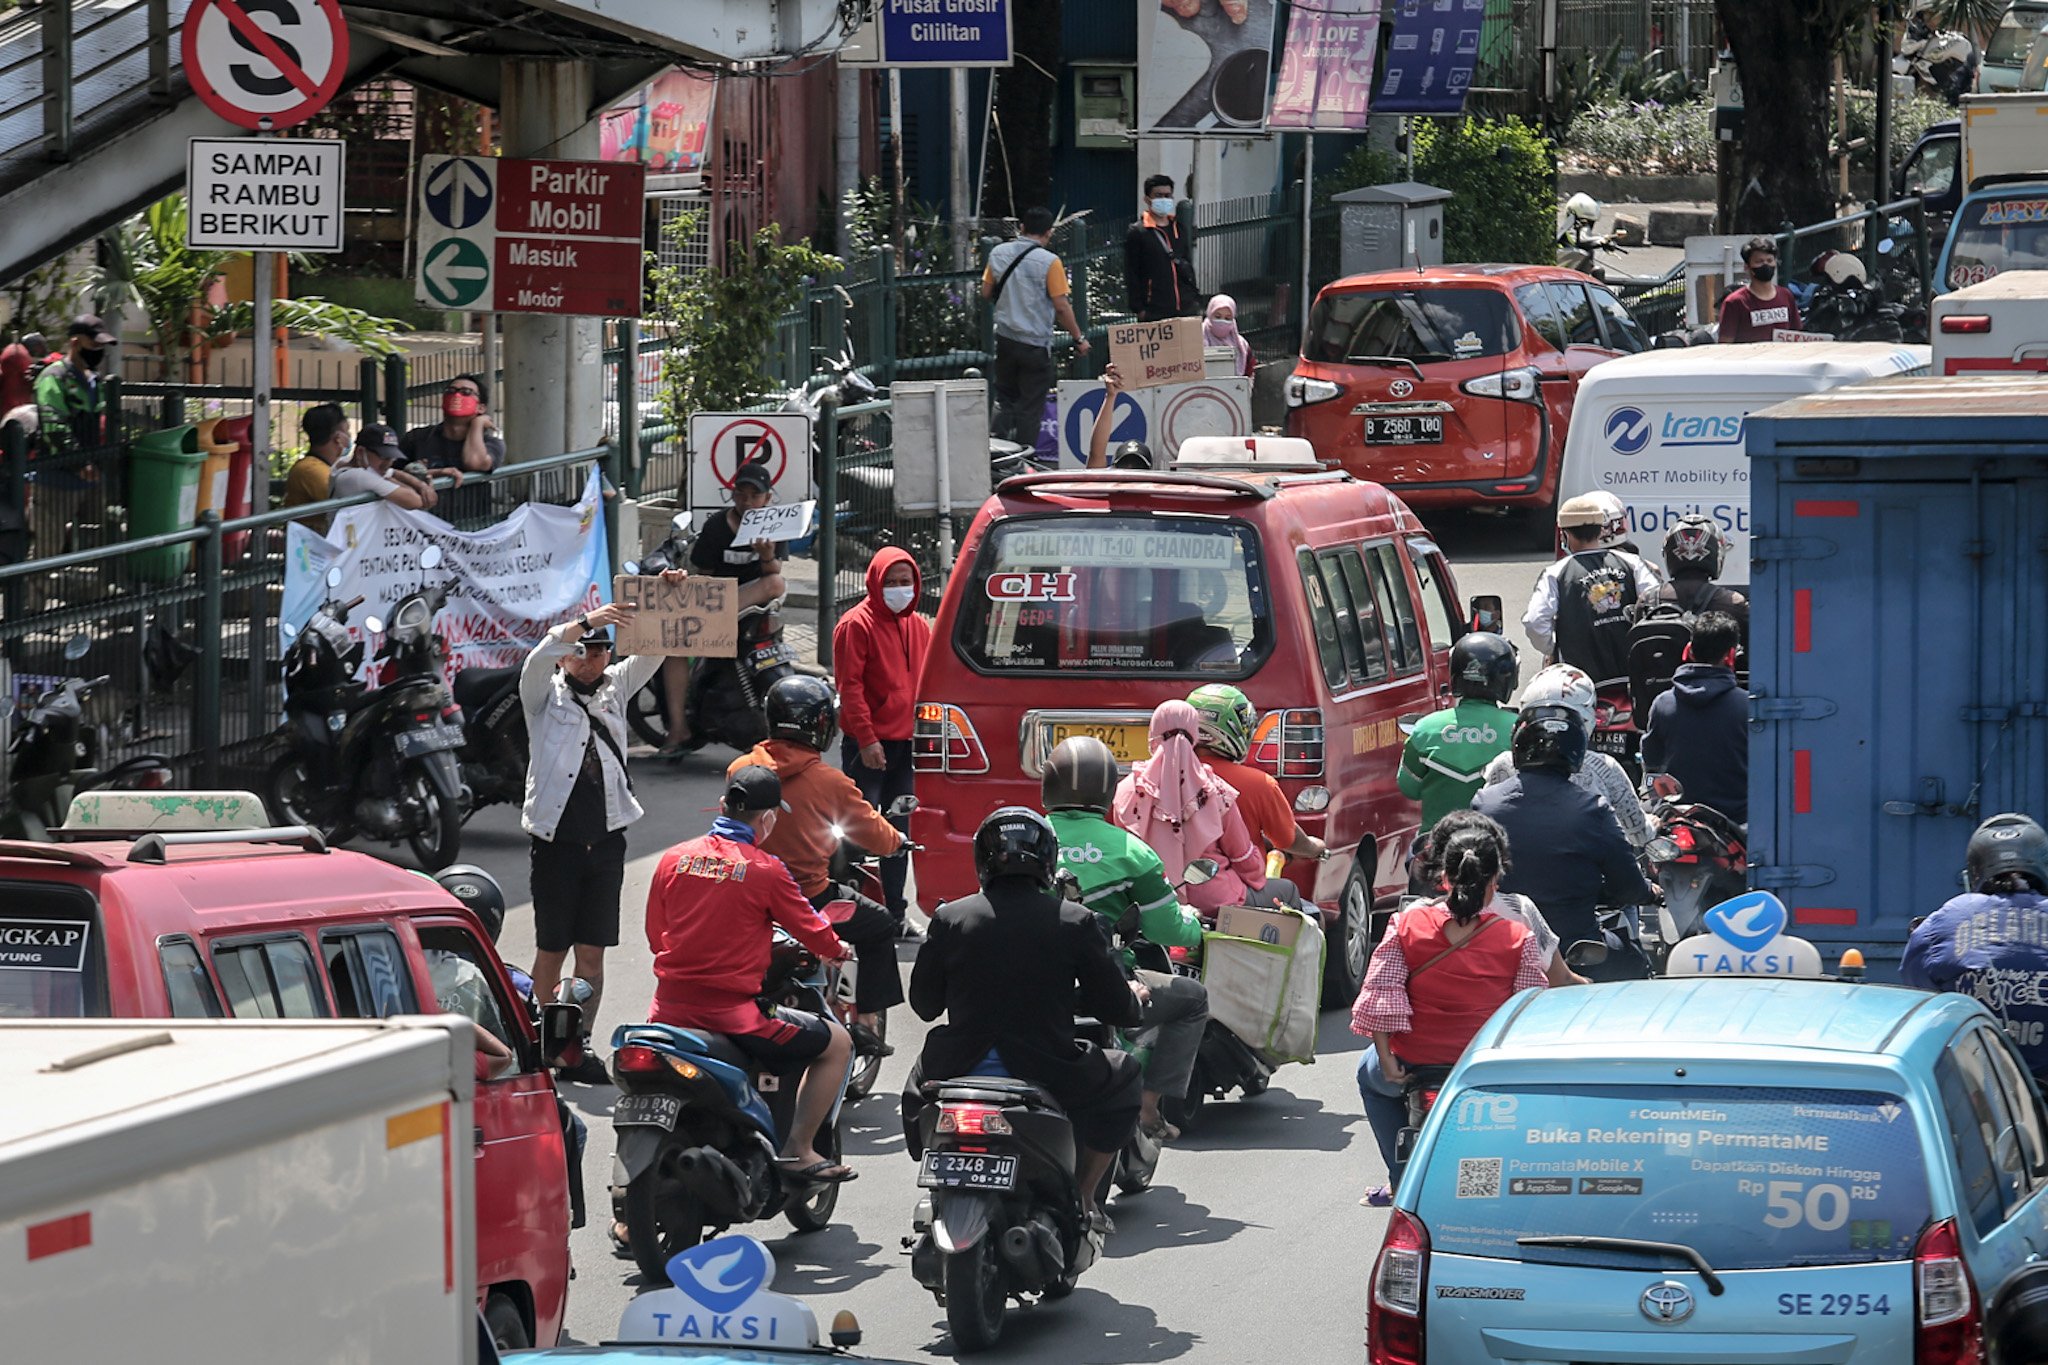 Sejumlah penjaja jasa reparasi seluler genggam berdiri di bahu jalan menawarkan jasa reparasi dan tukar tambah seluler genggam di Pusat Grosir Cililitan (PGC), Cililitan, Jakarta Timur, Selasa, (13/7/2021). Upaya tersebut dilakukan para penjaja seluler genggam yang merupakan pedagang di dalam Mal PGC akibat ditutupnya pusat perbelanjaan selama masa Pemberlakuan Pembatasan Kegiatan Masyarakat (PPKM) Darurat.